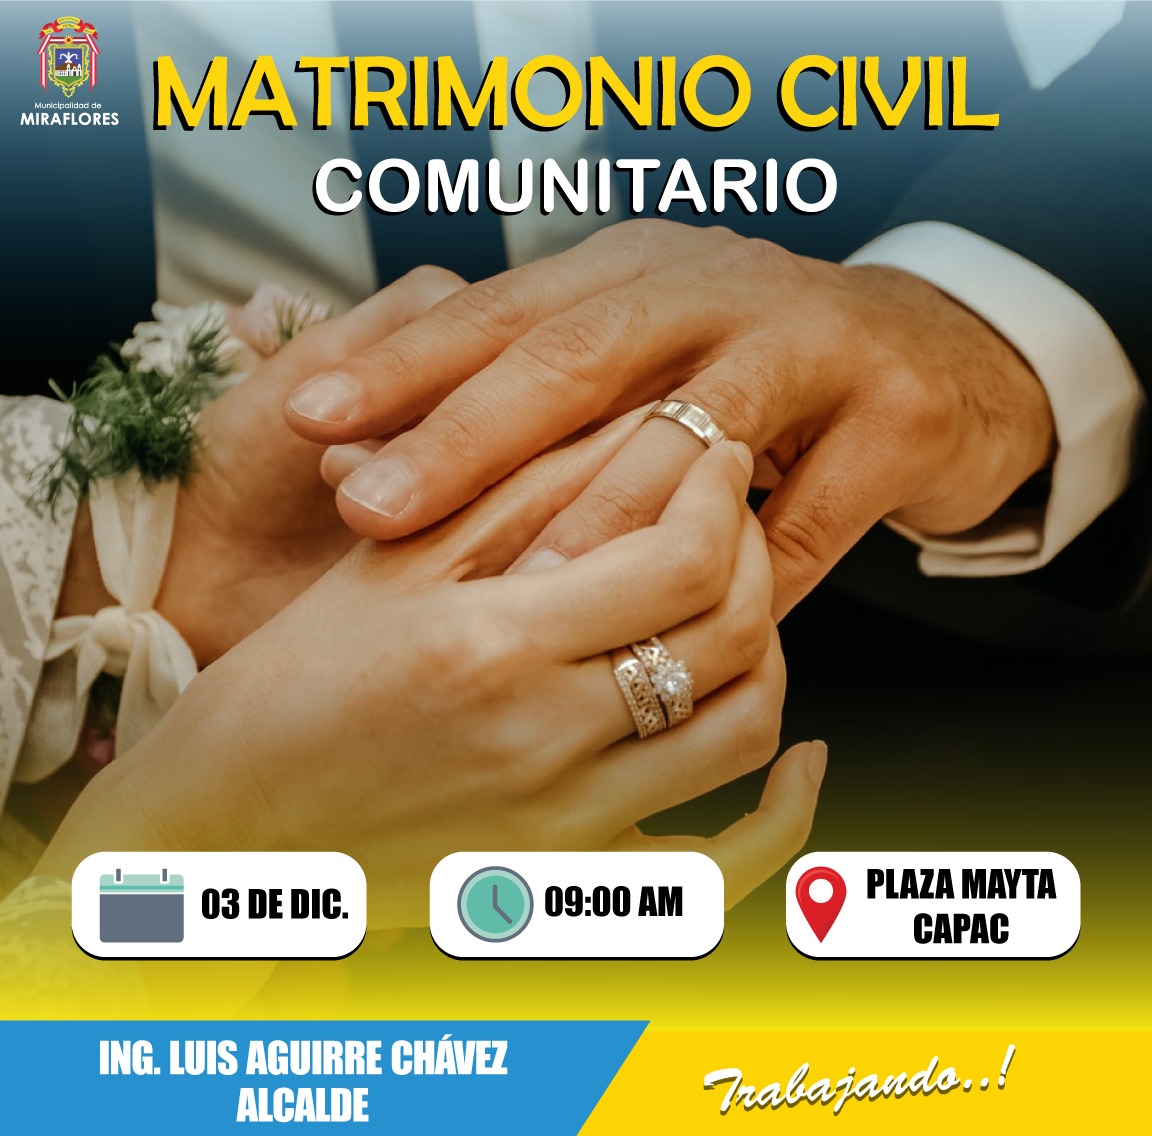 Municipio Miraflorino realizará matrimonio civil comunitario el 03 de diciembre